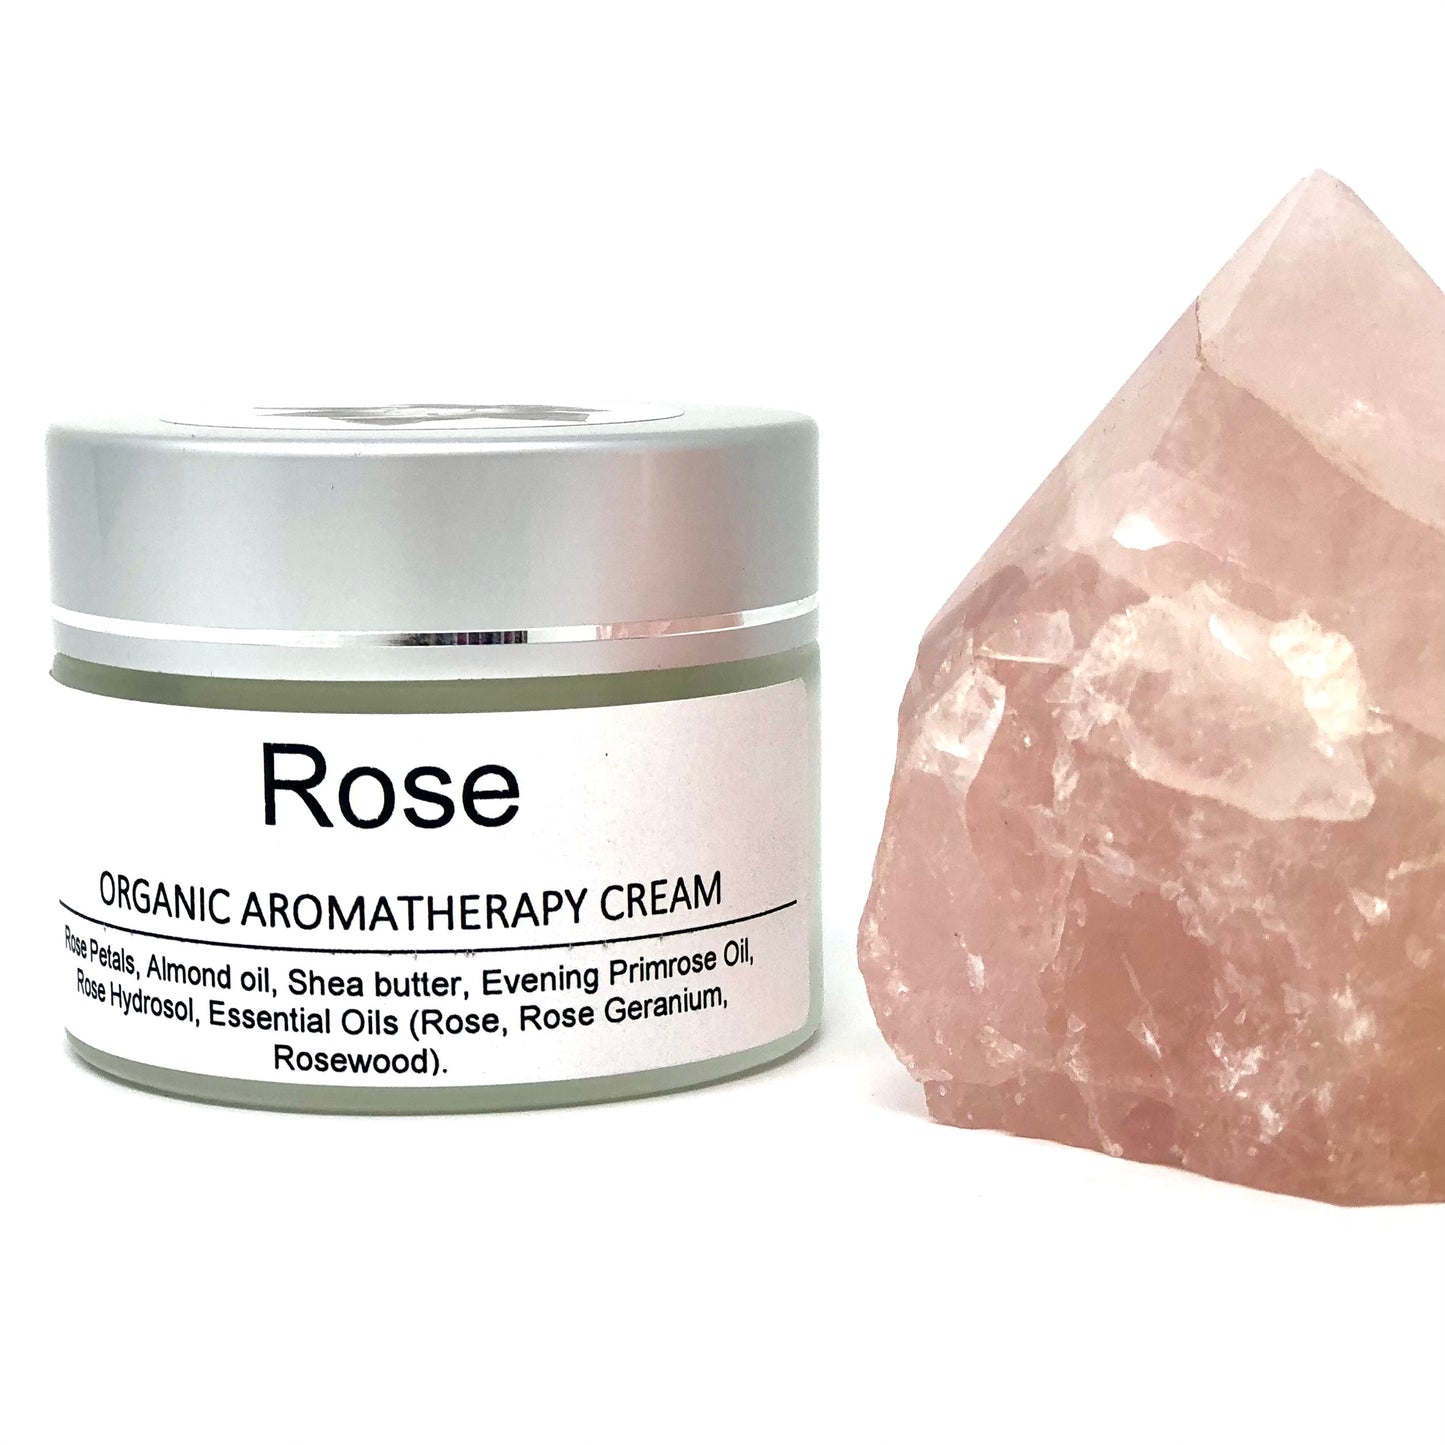 Rose Aromatherapy Cream (50g)